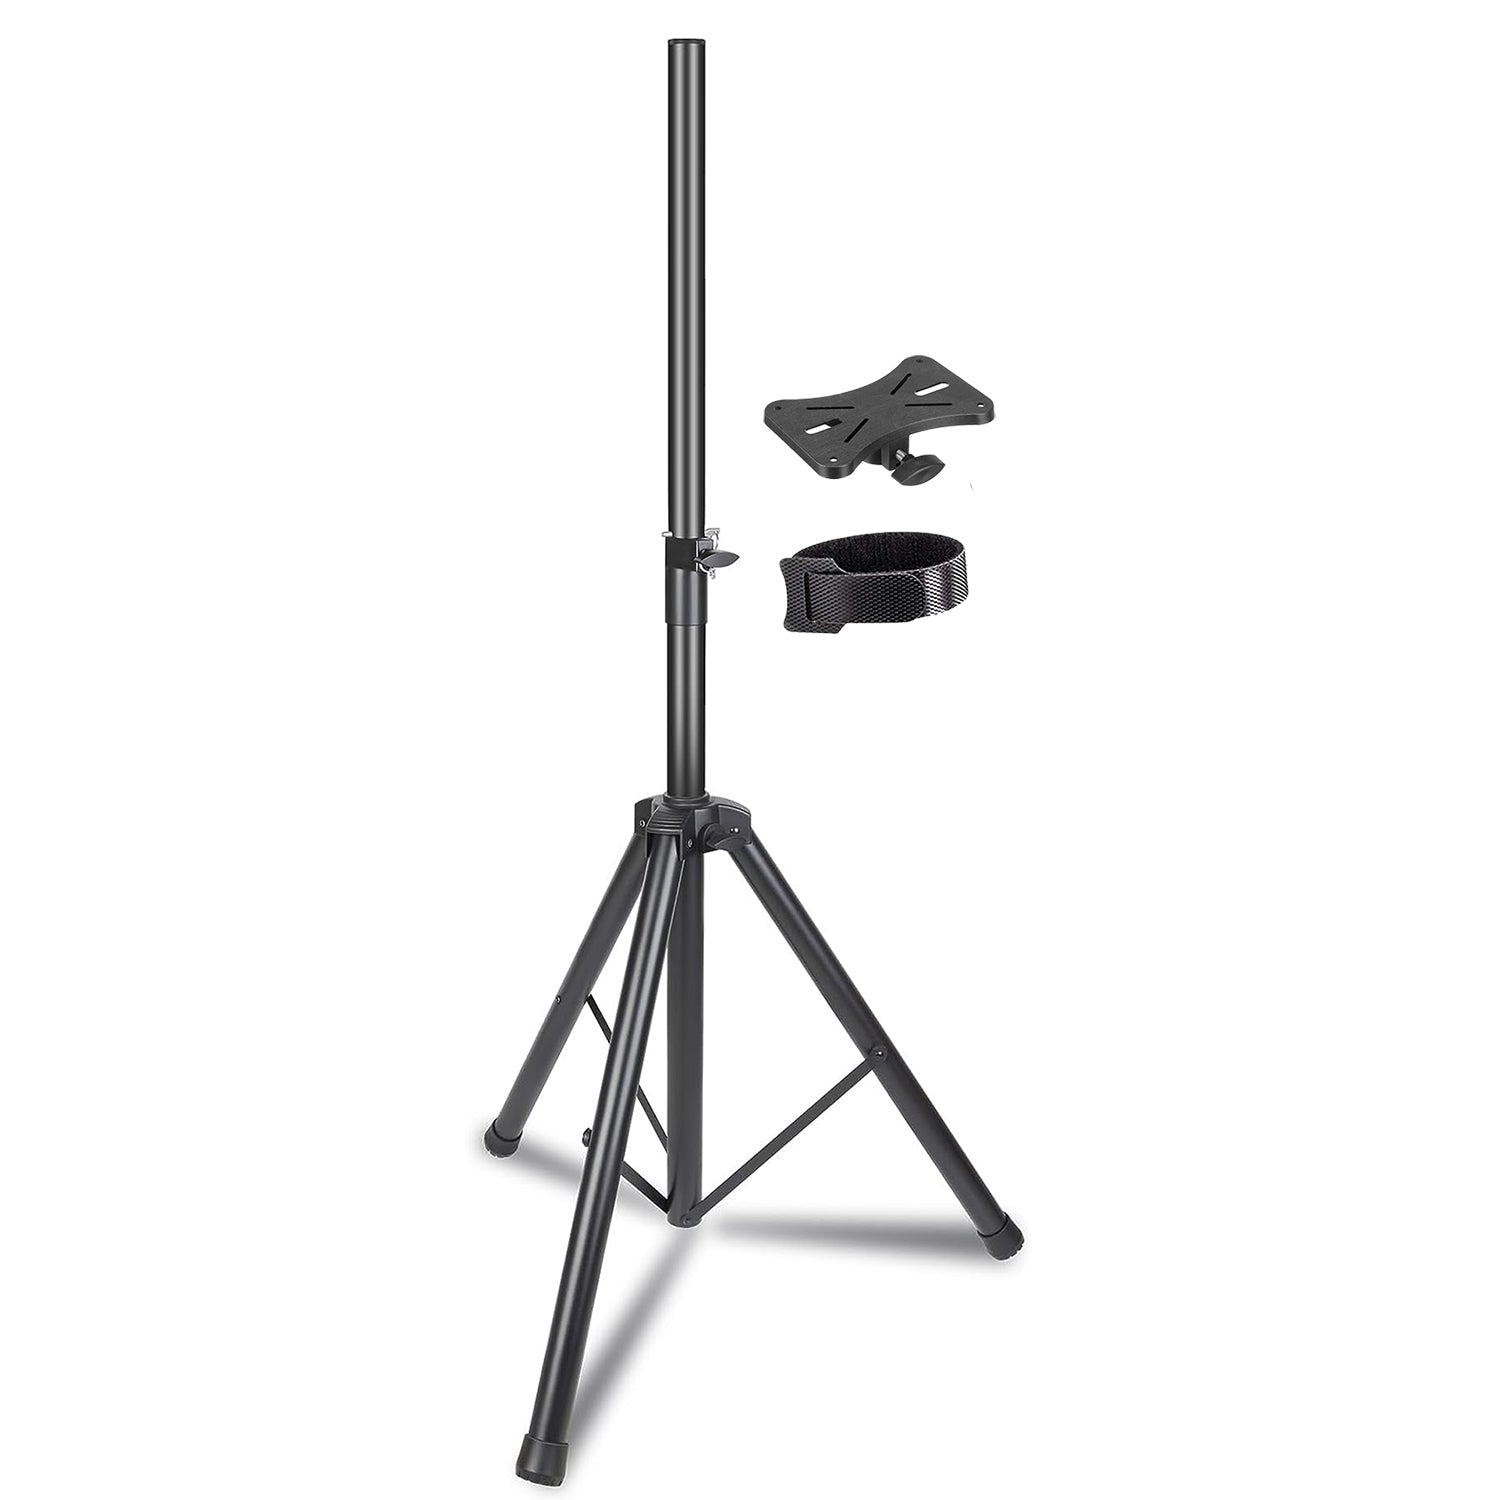 5 Core Speaker Stand Tripod Tall Adjustable 35mm DJ Studio Monitor Stands Pole Mount 1 2 Pc